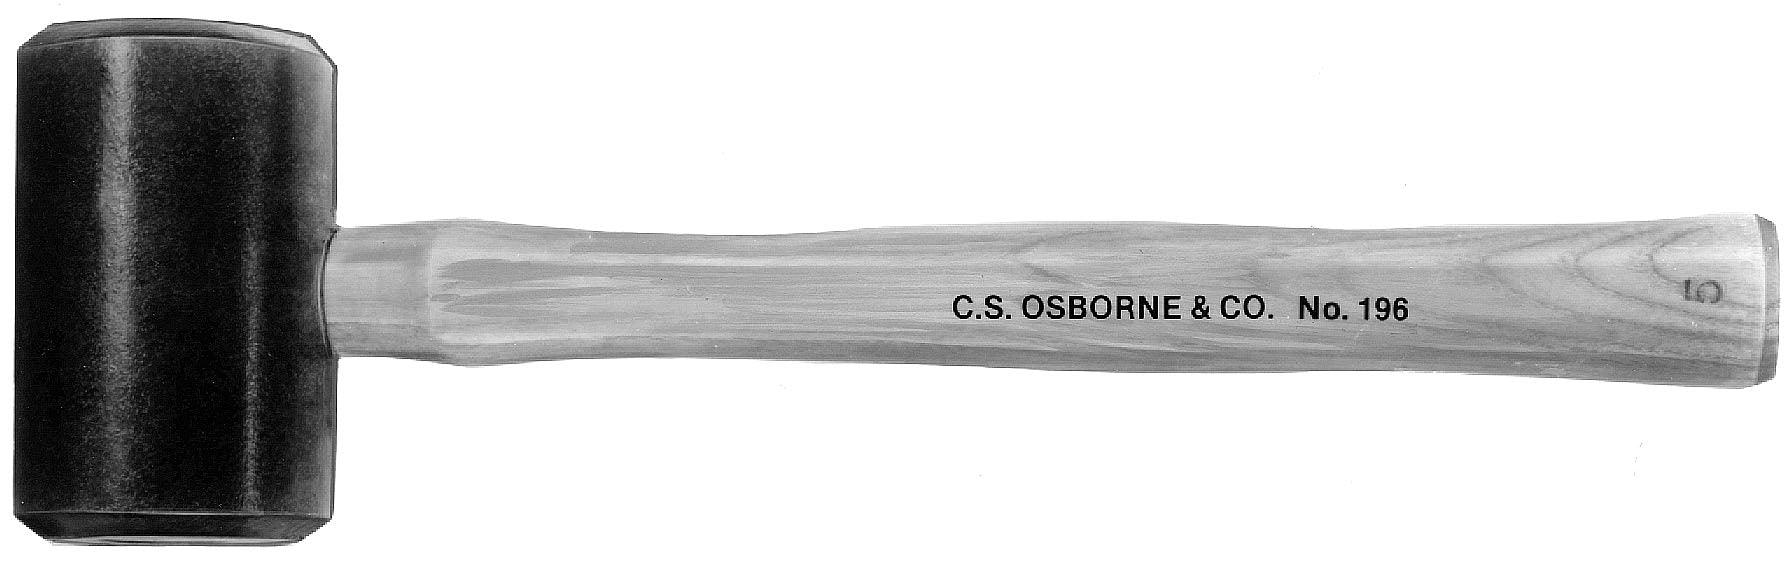 C.S. Osborne Rawhide Mallet - Solid Head - Size 0 - Alan Richard Textiles, LTD C.S. Osborne Hammers and Mallets